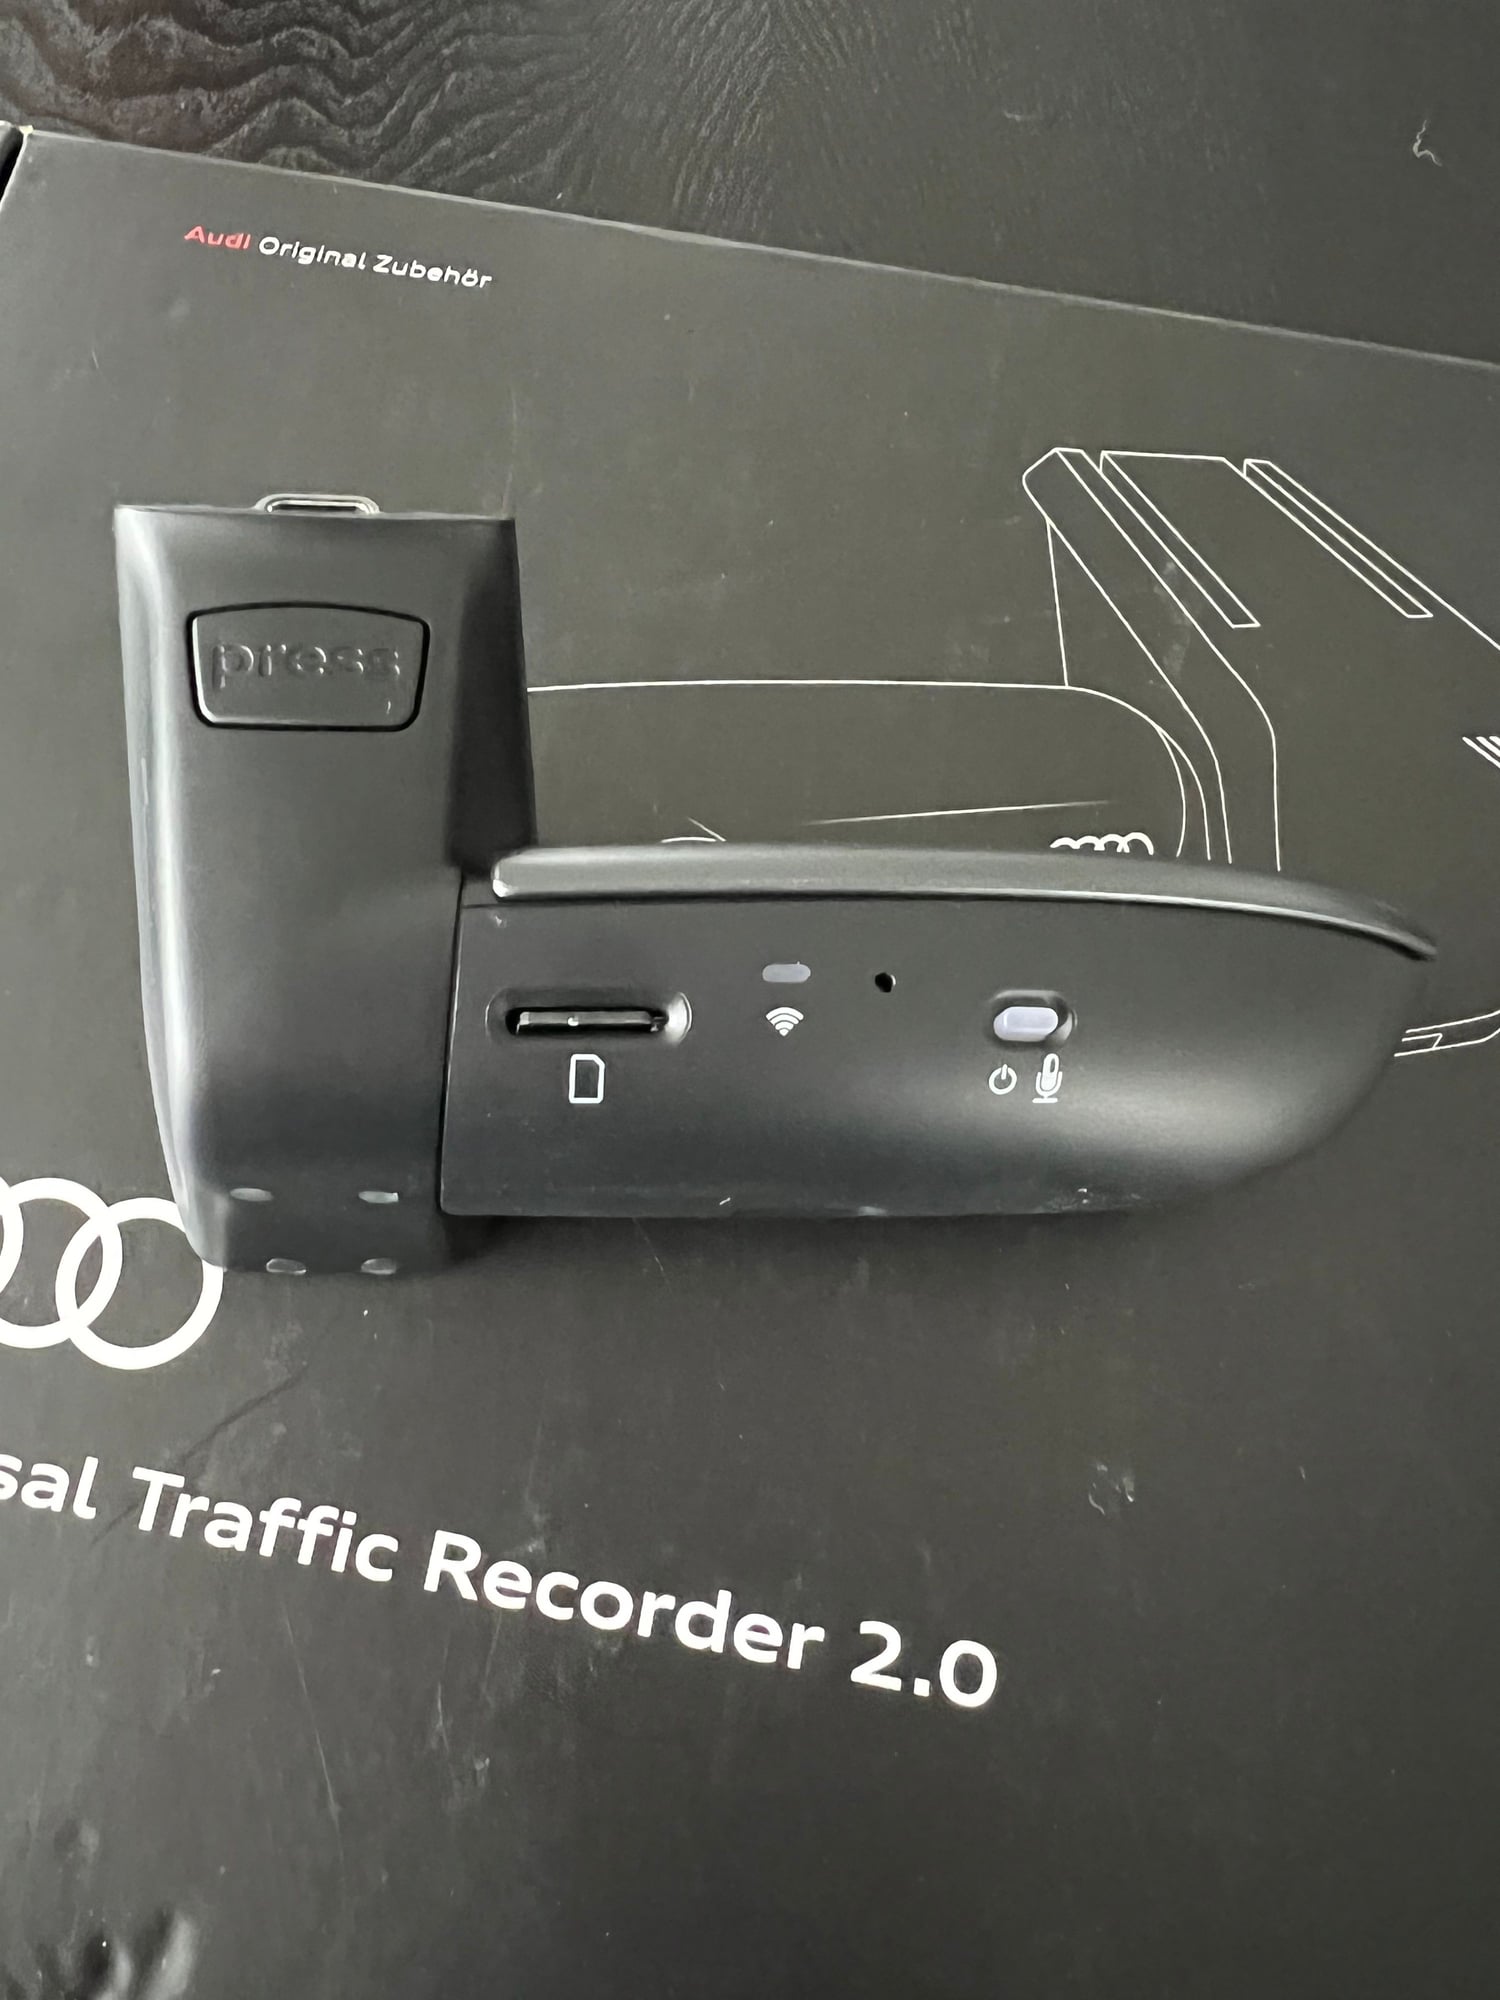 Dash cam (universal traffic recorder 2.0) > Shopping World